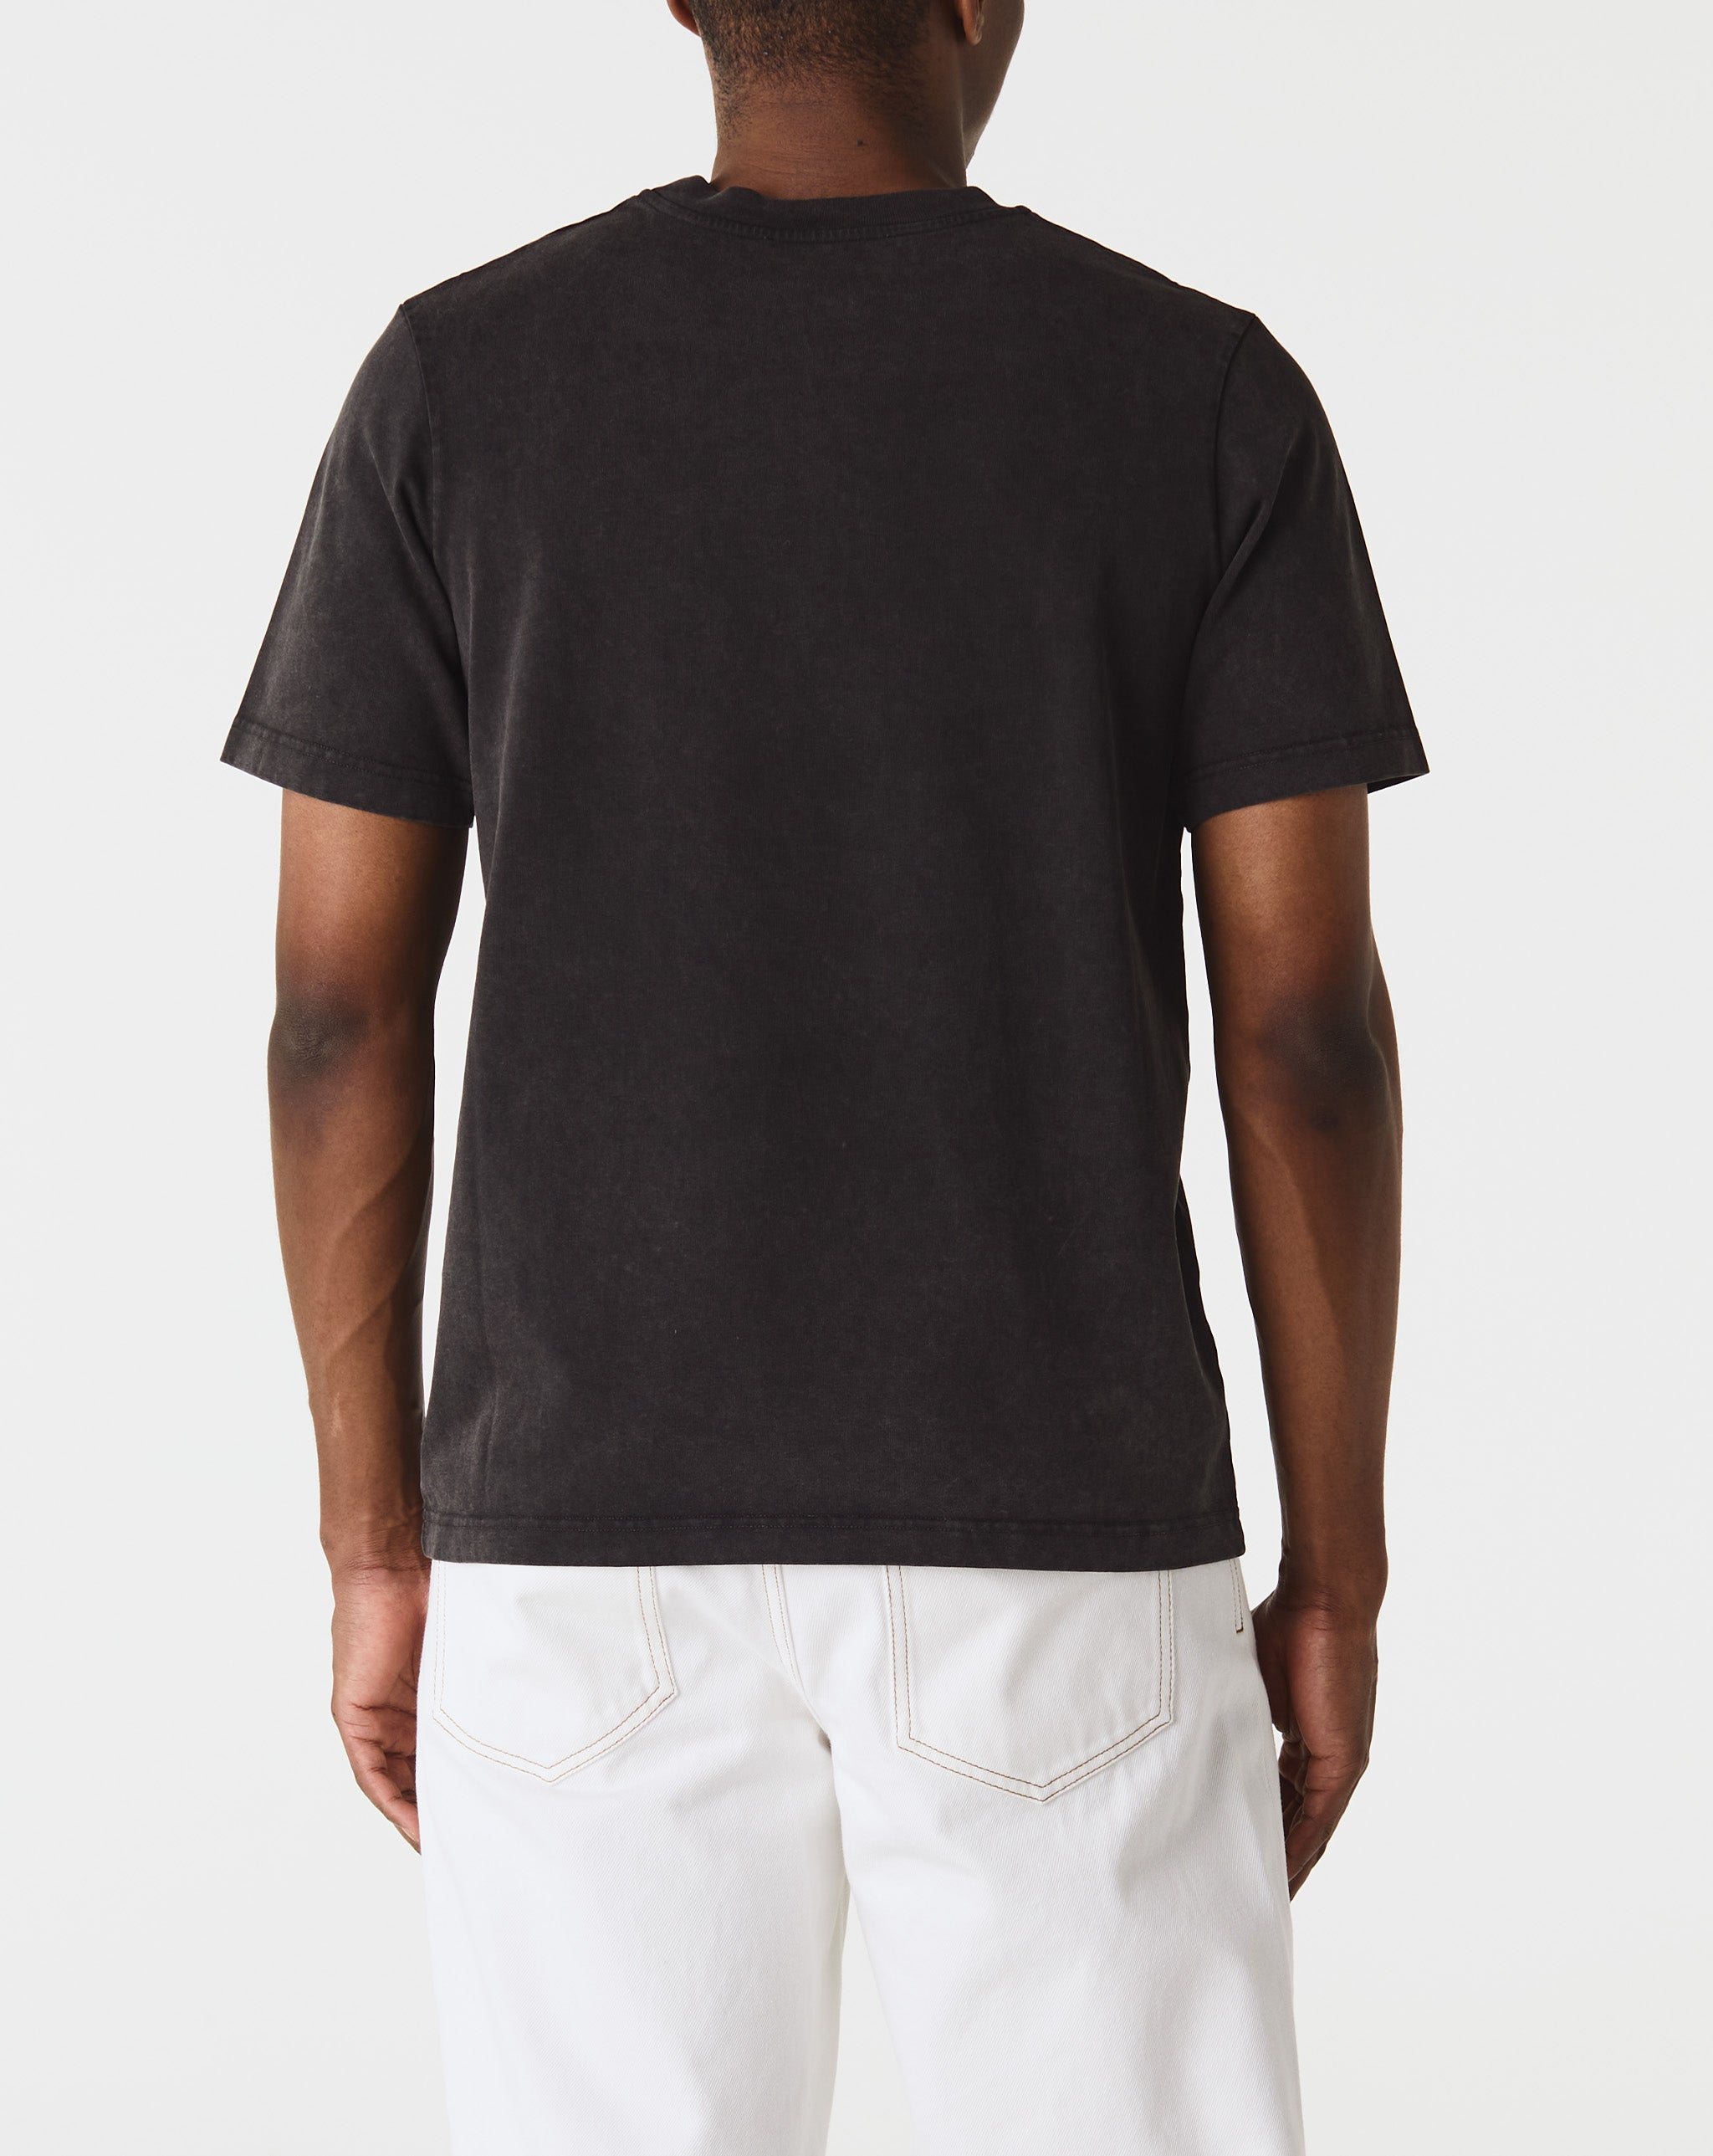 Casablanca adidas Originals Varsity Crew Neck Sweatshirt  - Cheap Urlfreeze Jordan outlet